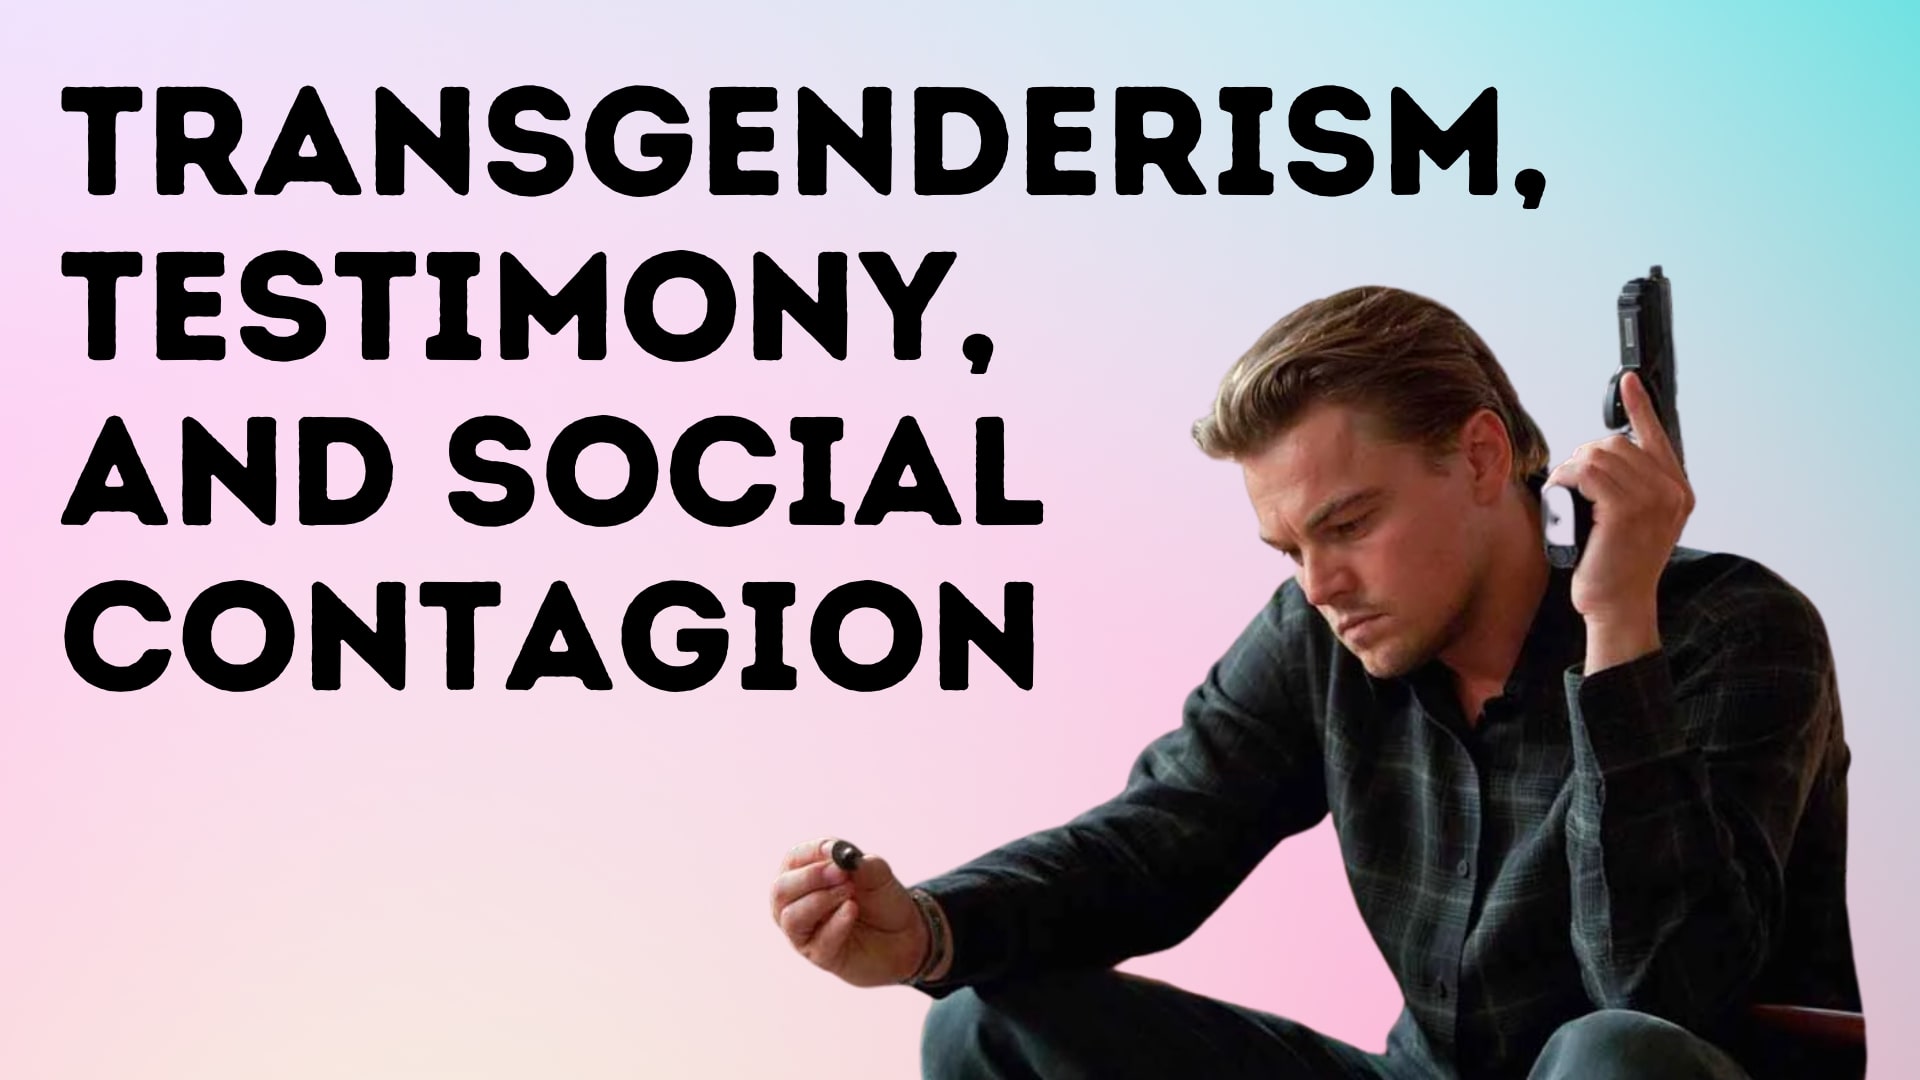 Transgenderism, Testimony, and Social Contagion